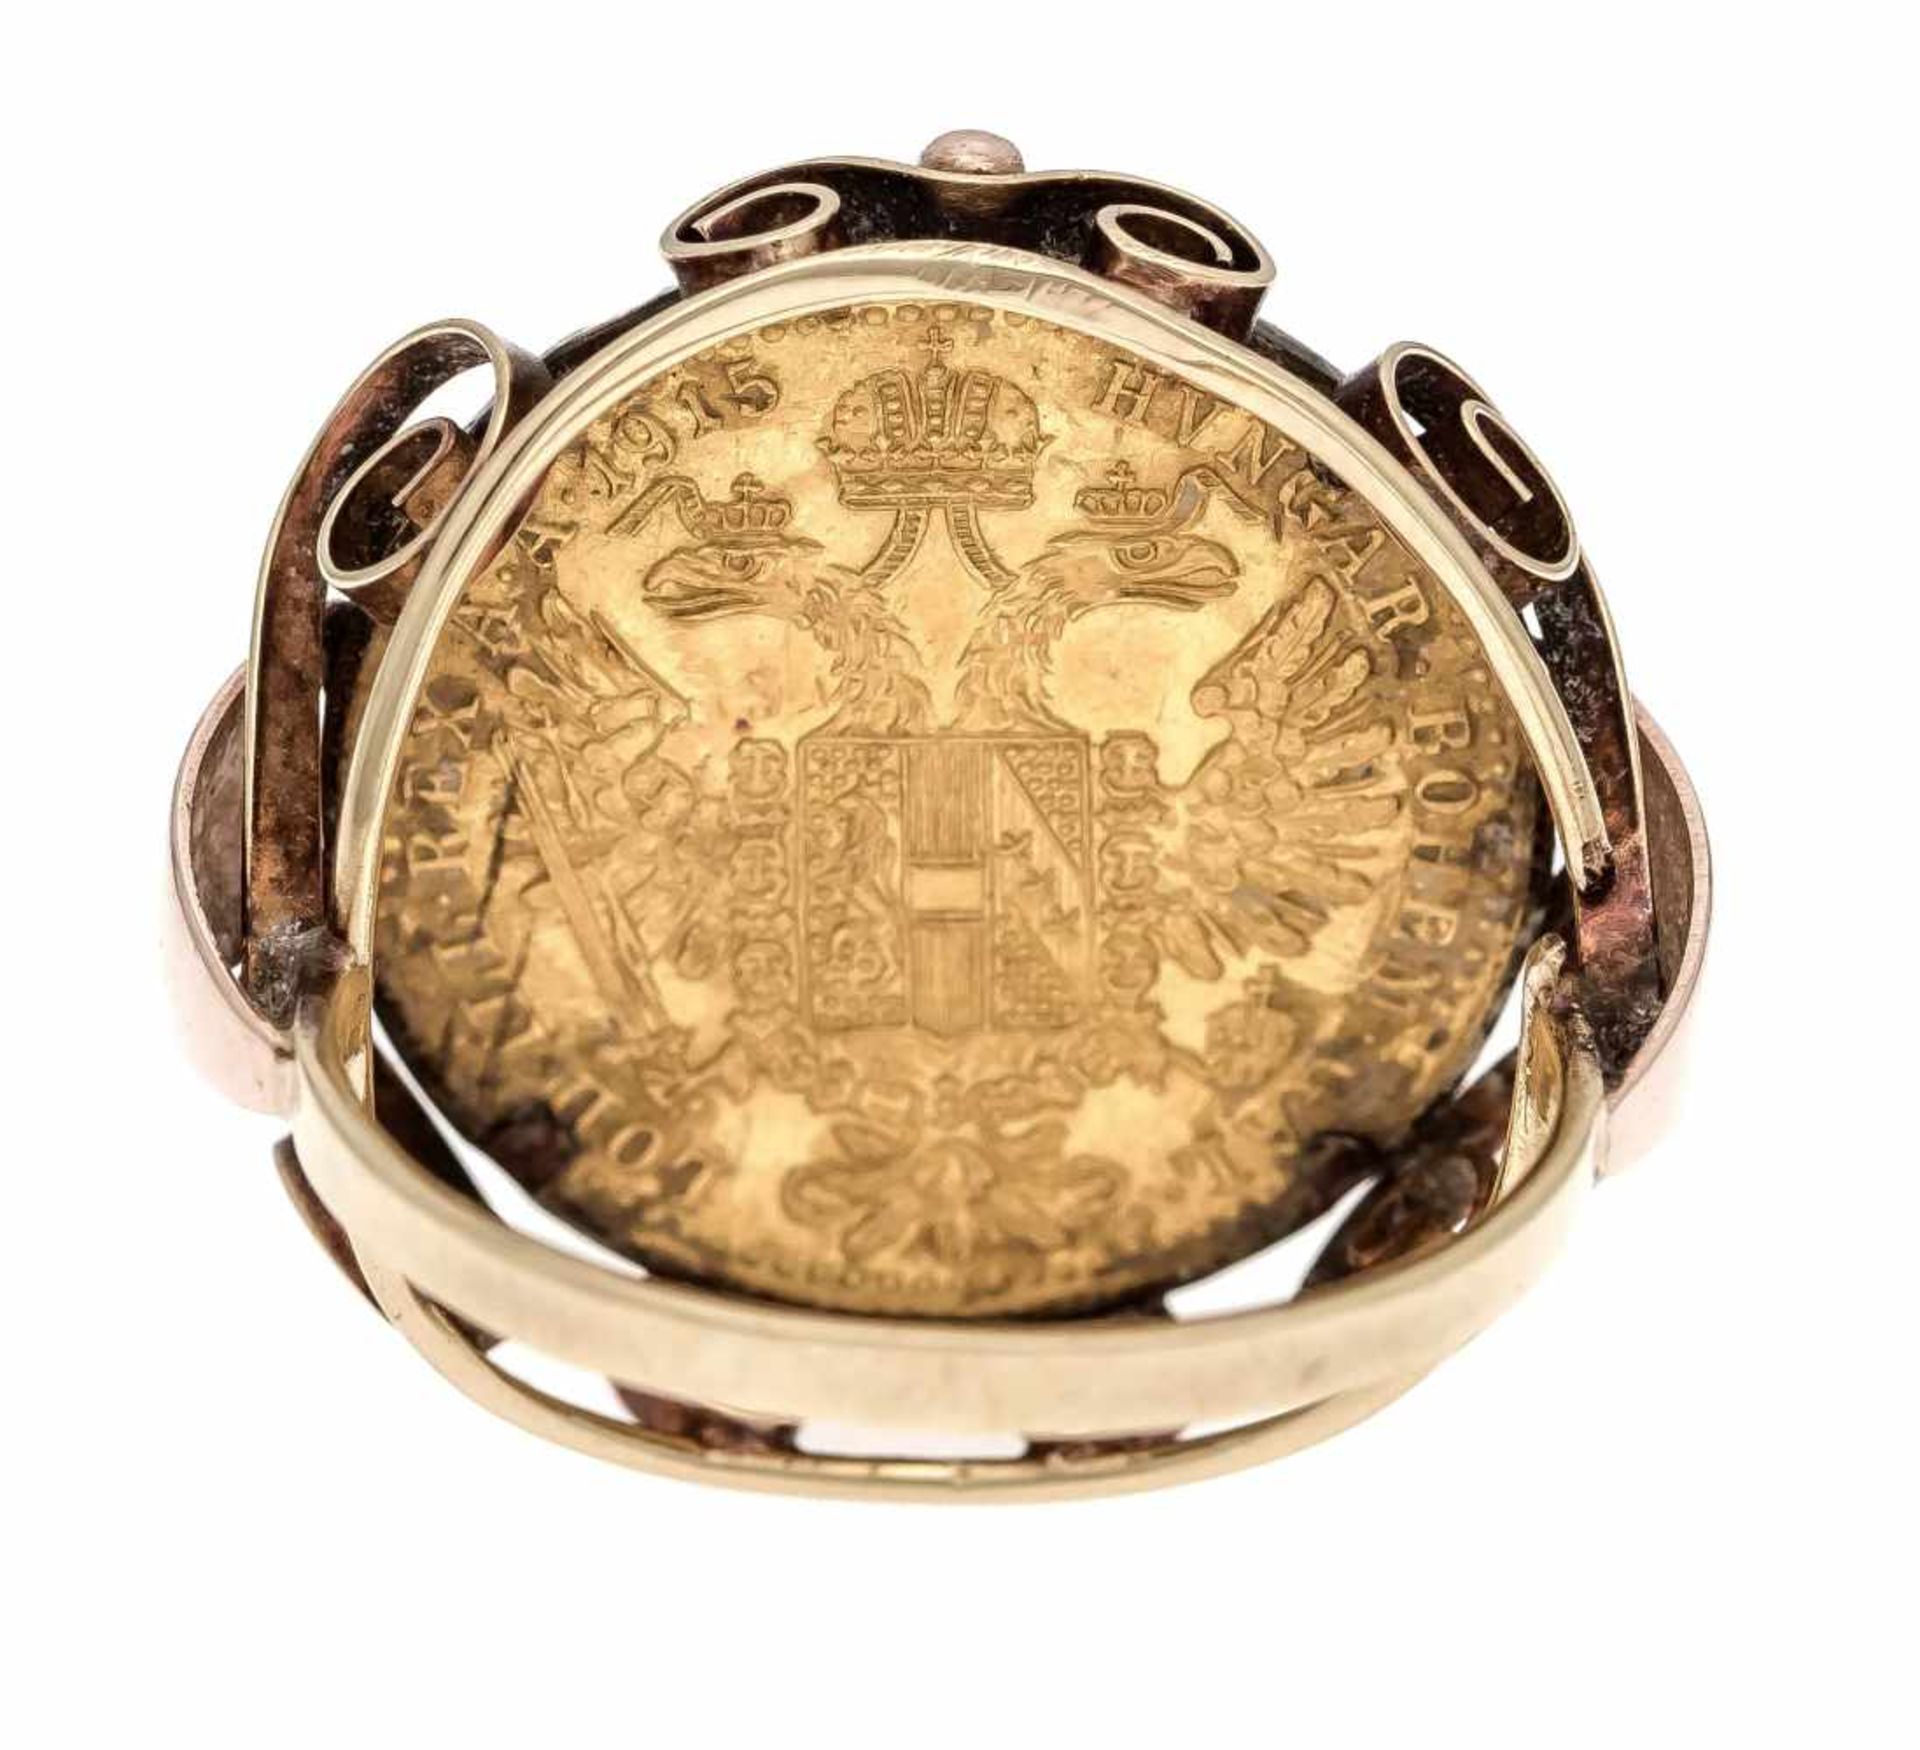 Münz-Ring GG 750/000 mit einer Goldmünze 986/000 1 Dukat 1915, RG 53, 6,7 gCoin ring GG 750/000 with - Image 3 of 3